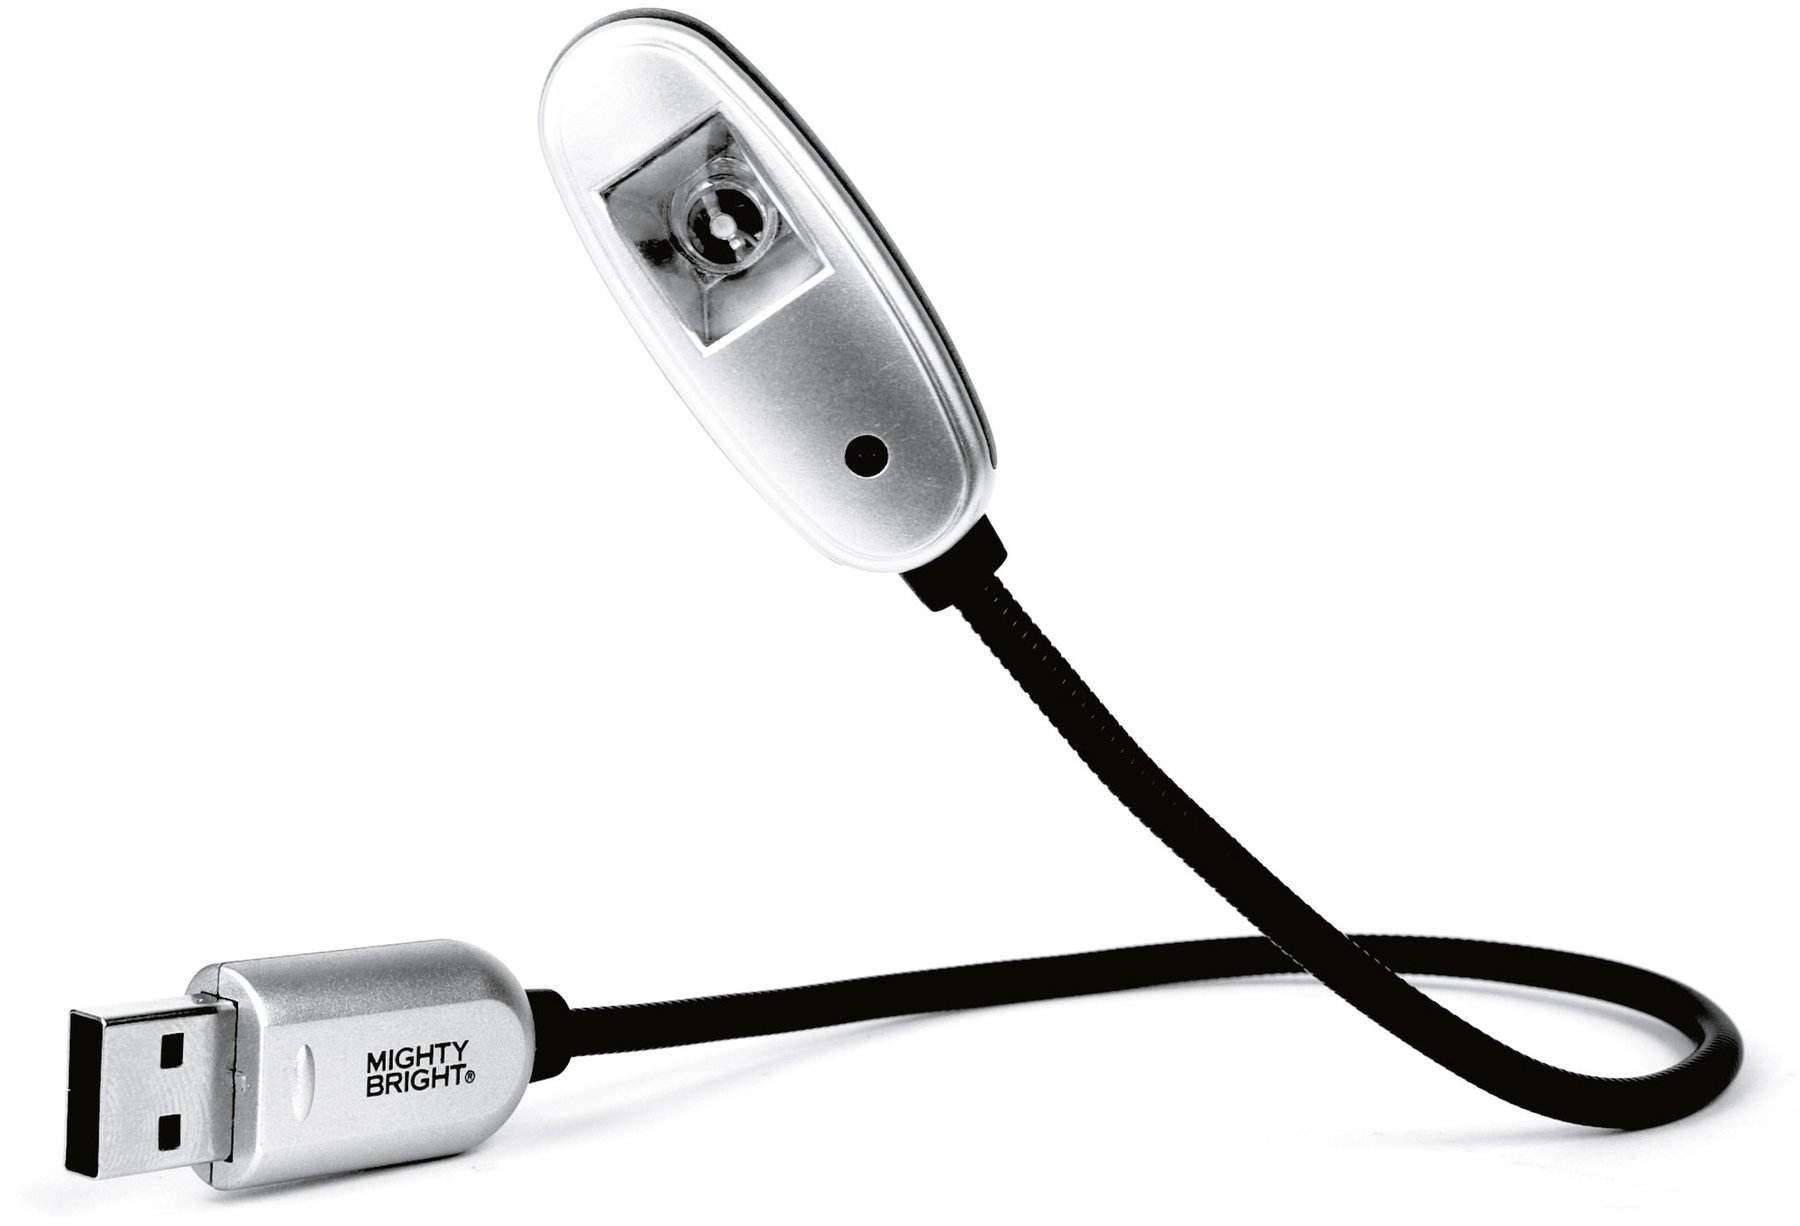 Musicstand Light Konig & Meyer 85681 1 LED USB Light Mighty Bright Silver